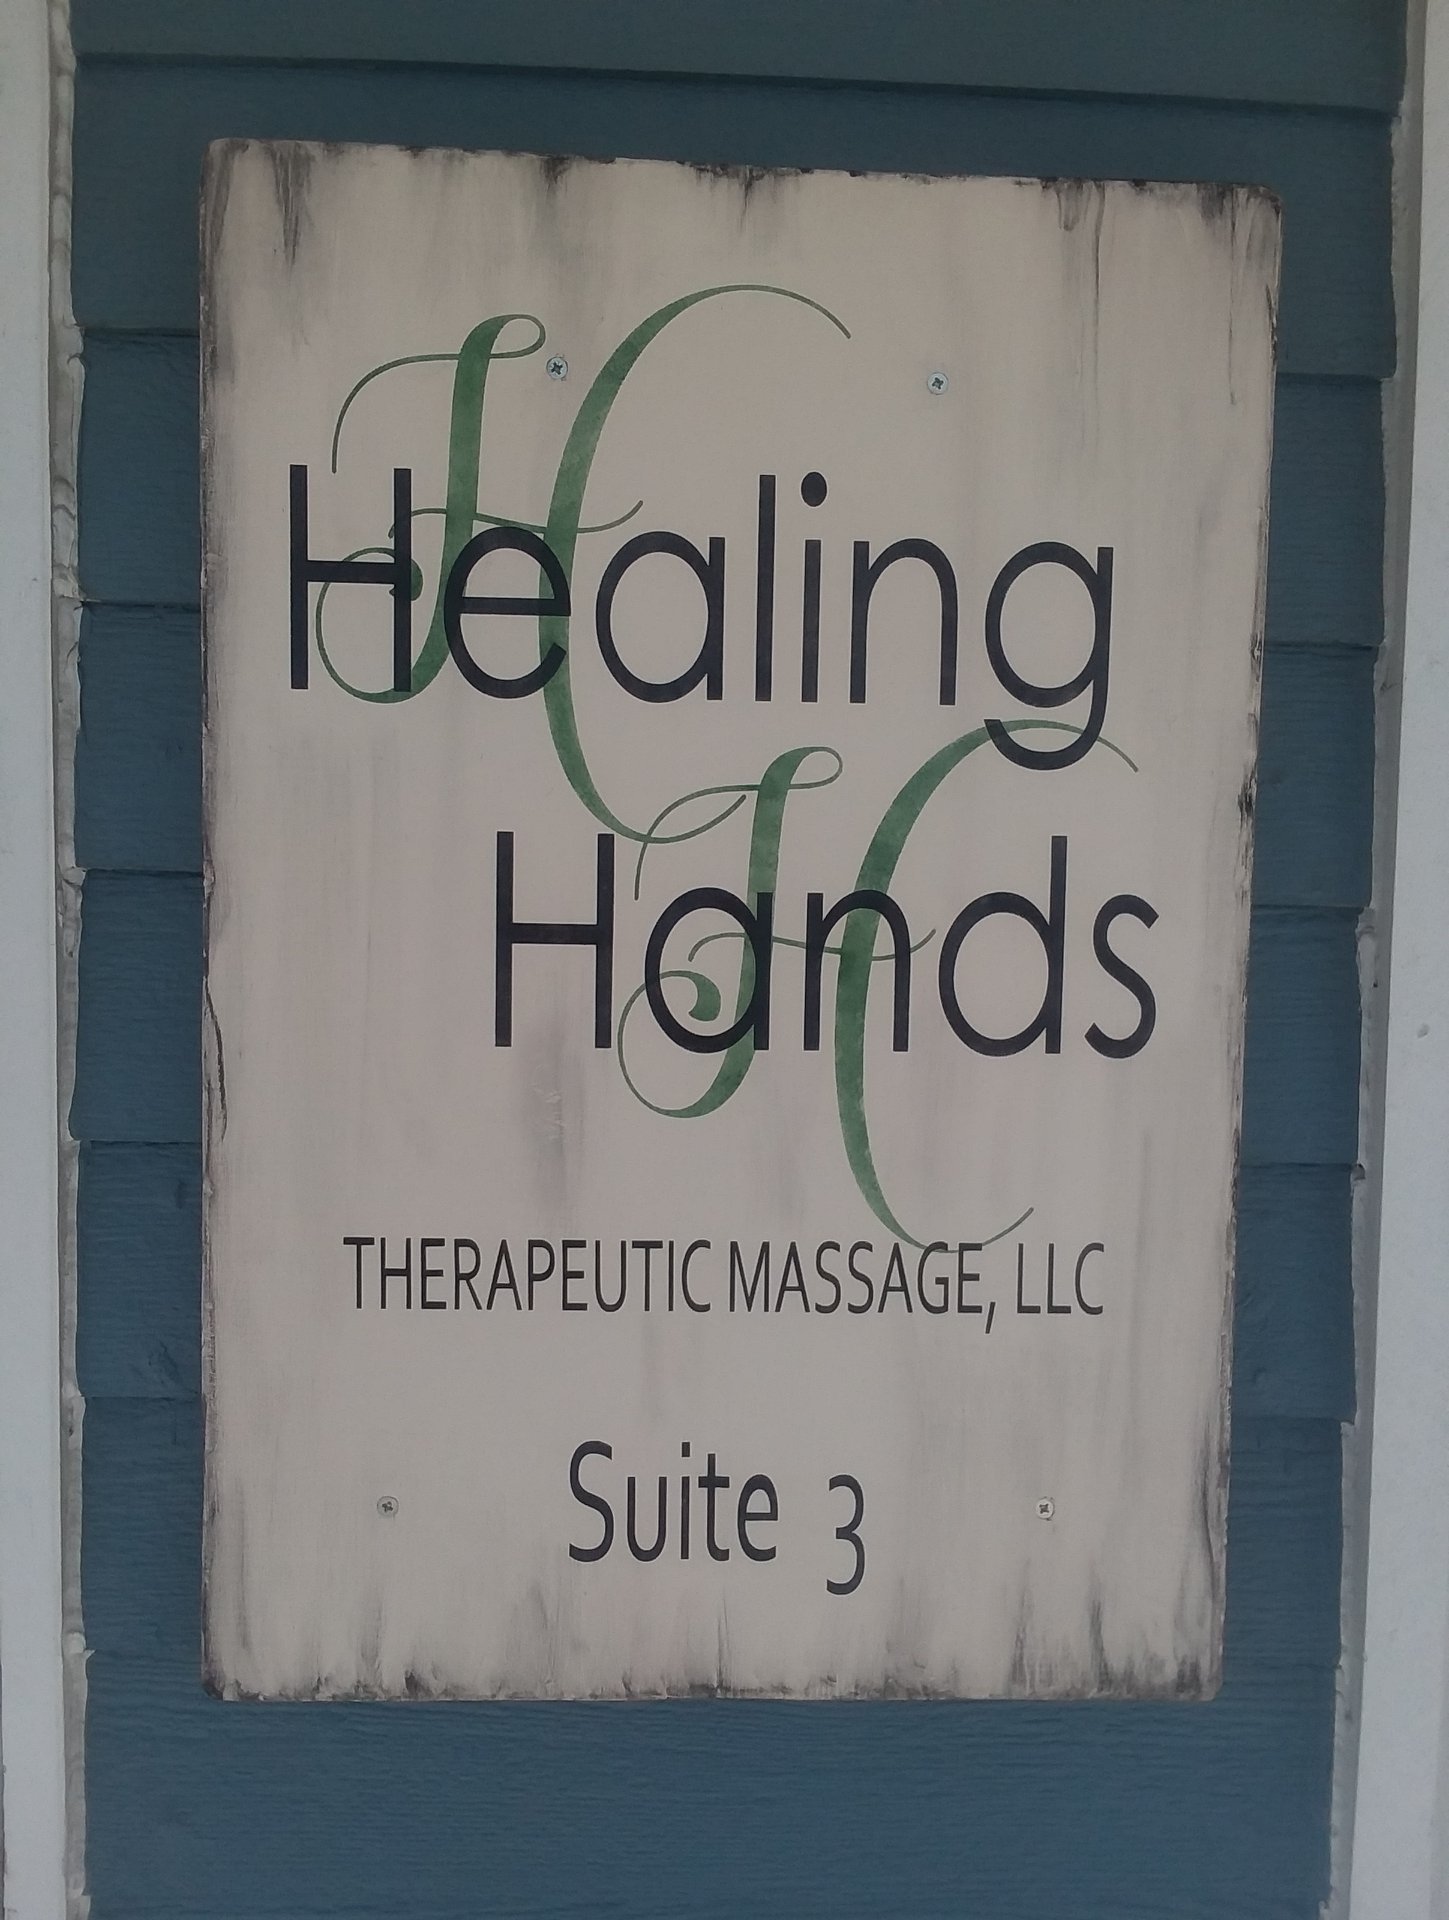 Healing Hands Therapeutic Massage W62N179 Washington Ave #3, Cedarburg Wisconsin 53012